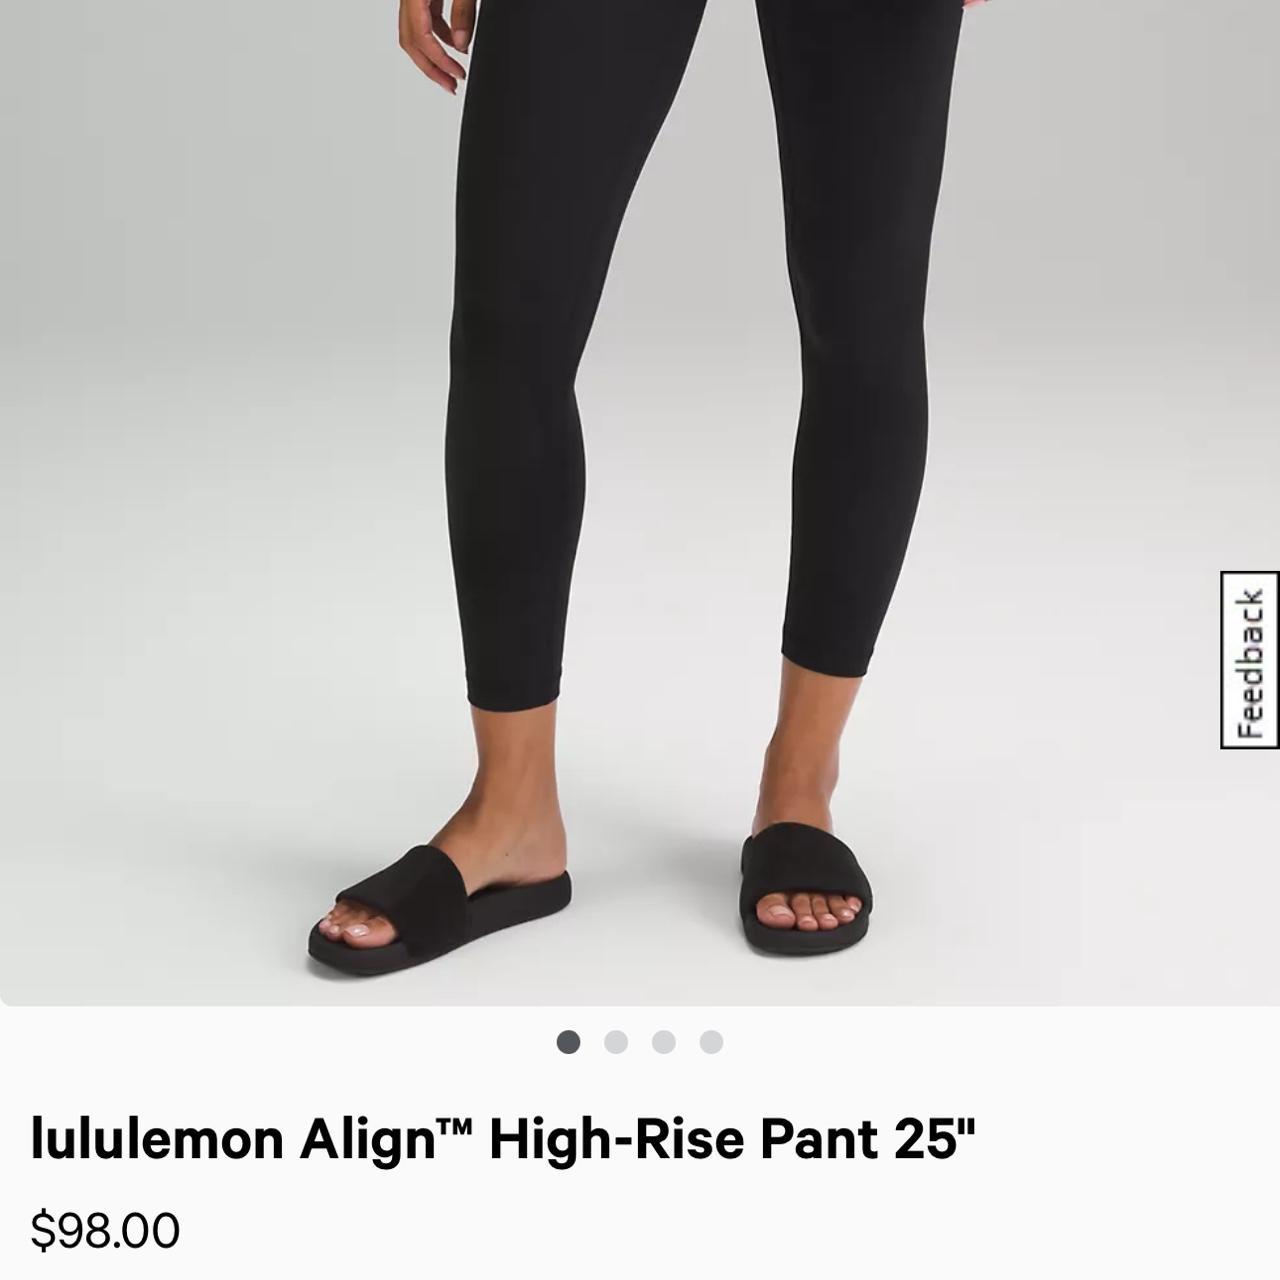 Lululemon Align leggings 25” in a dark - Depop